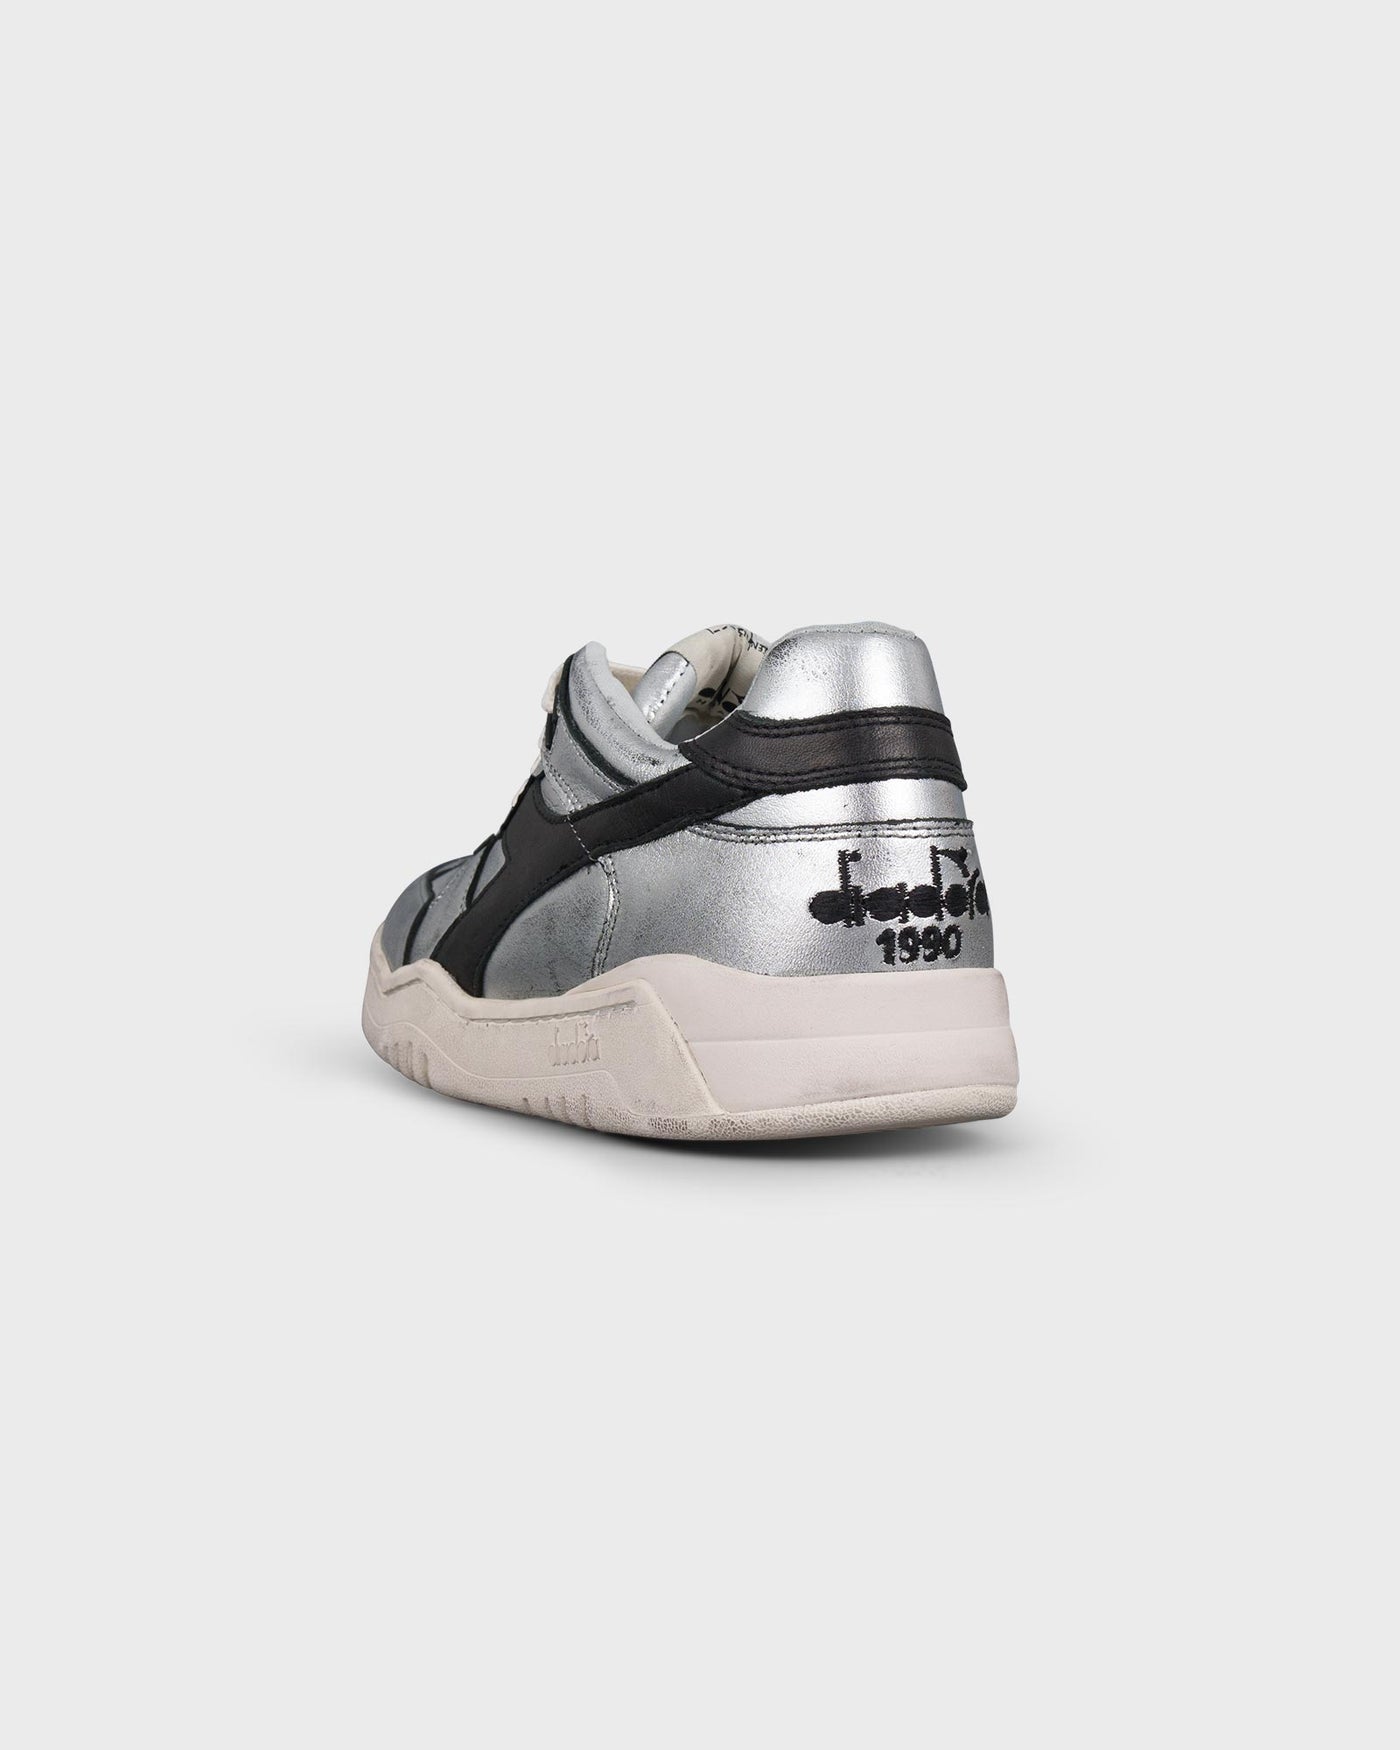 Diadora Damen Sneaker B.560 Silver Used Silver Metallic Black myMEID